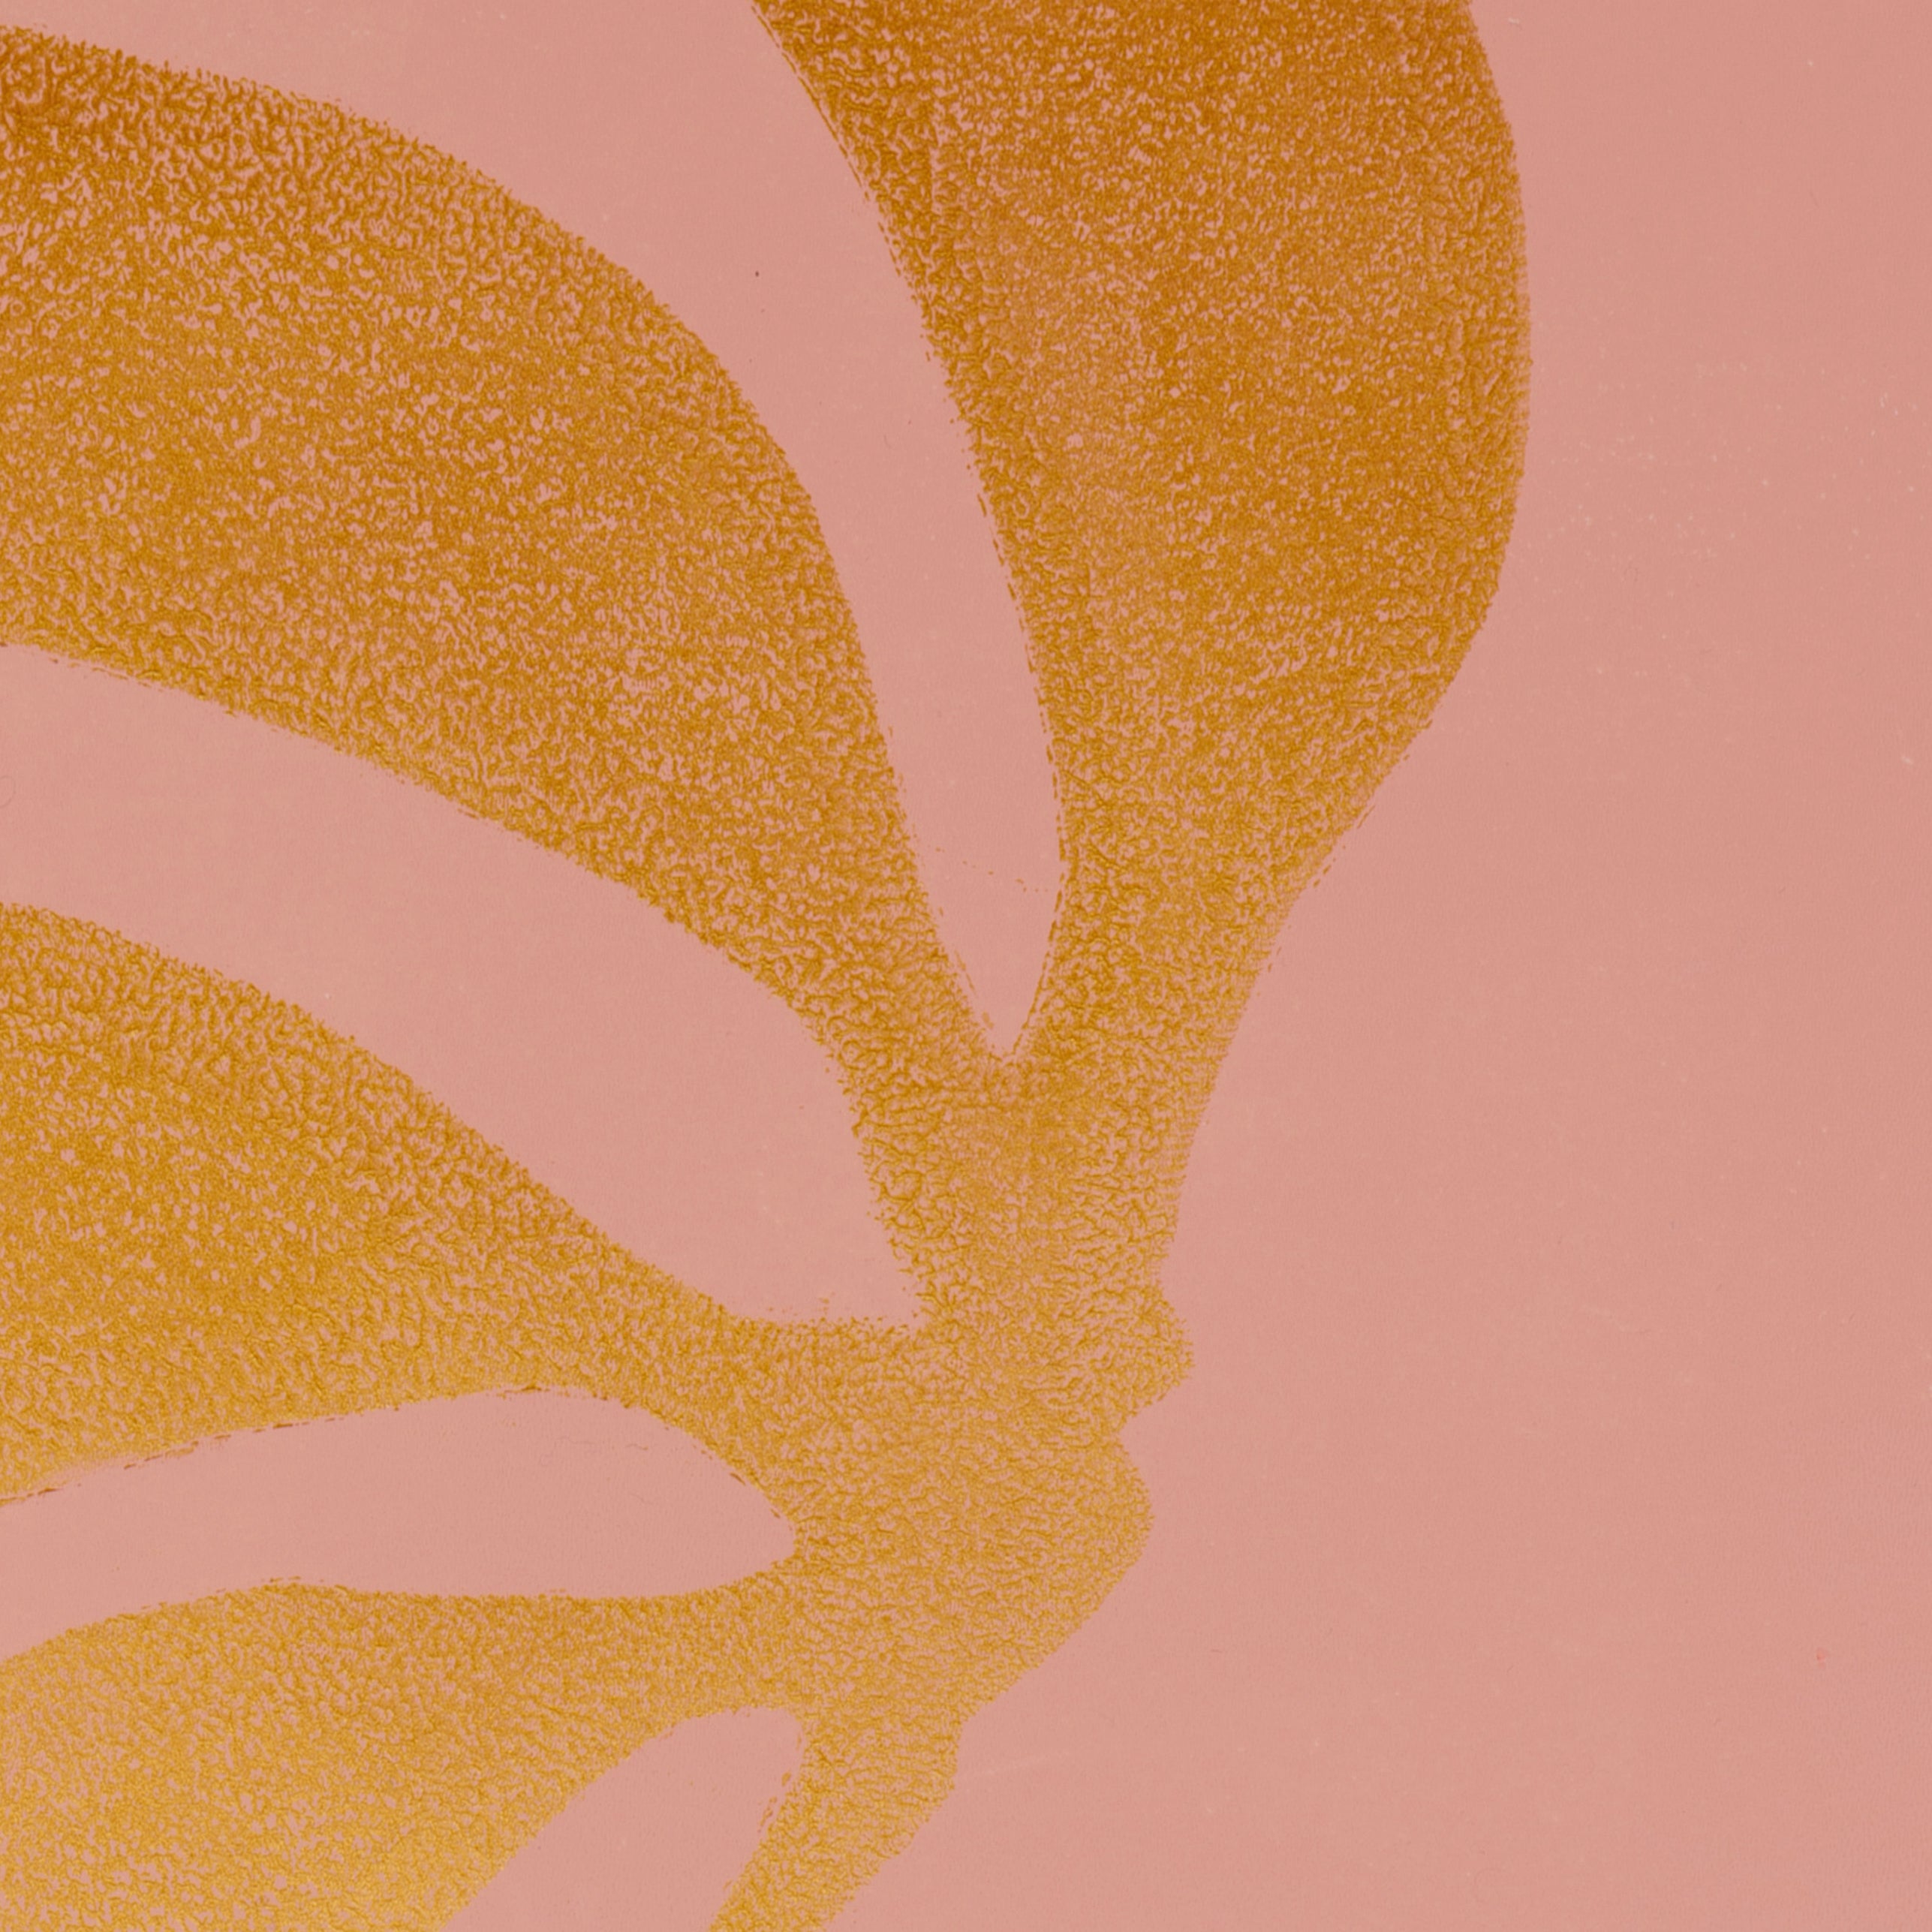 Gold and soft pink wall art bananas | handmade art print | Enkel Art Studio